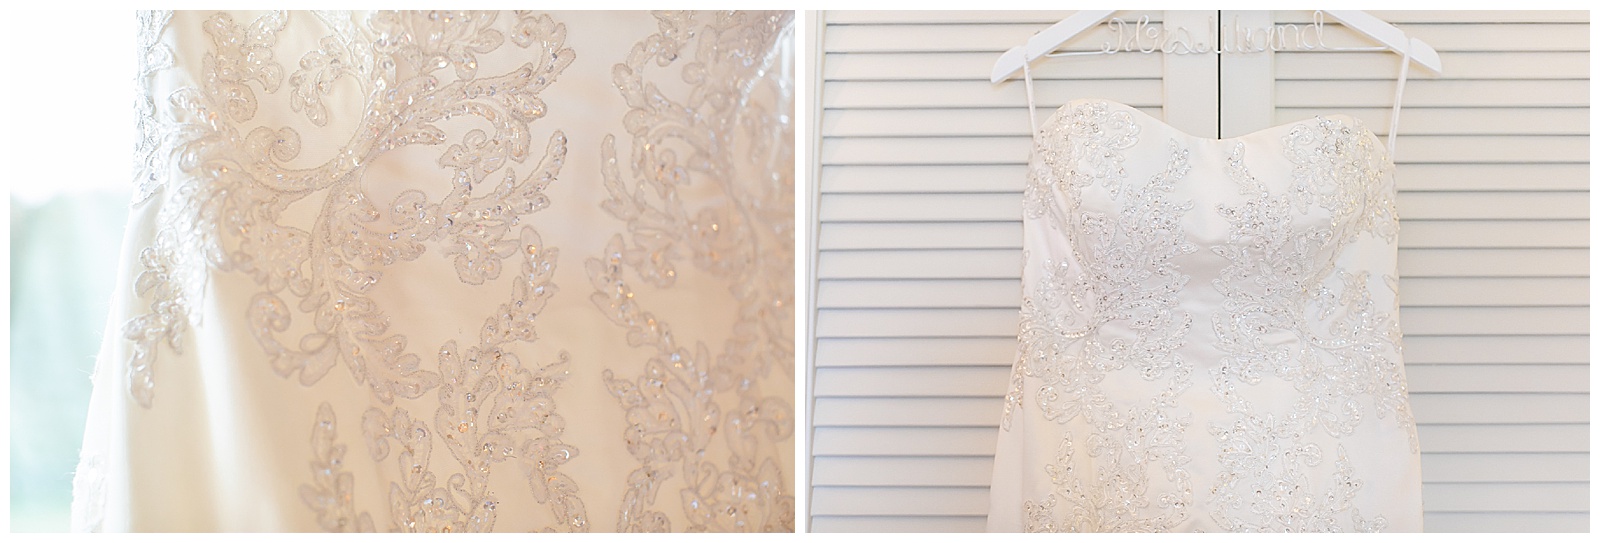 beaded sleeveless wedding dress on personalized hanger